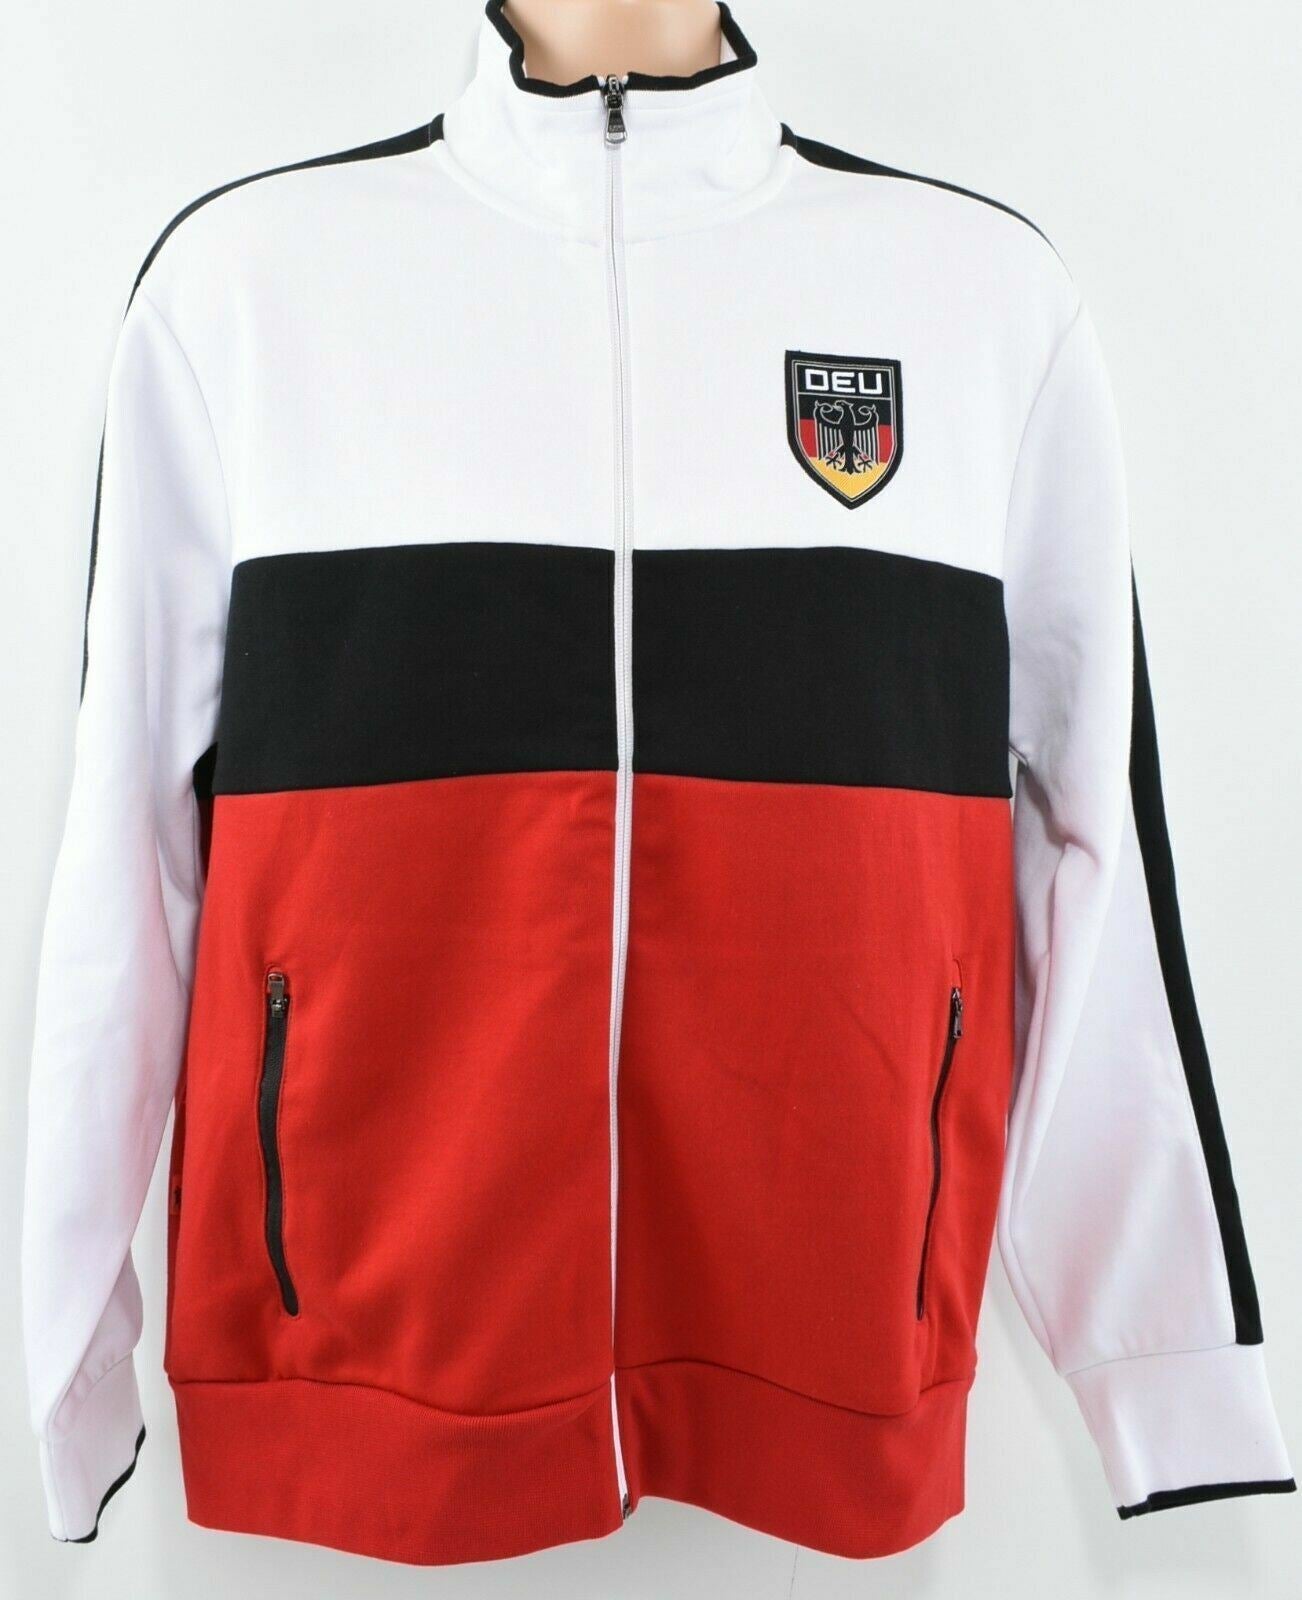 POLO RALPH LAUREN Men's Germany Zip Track Jacket, White/Multi, size M